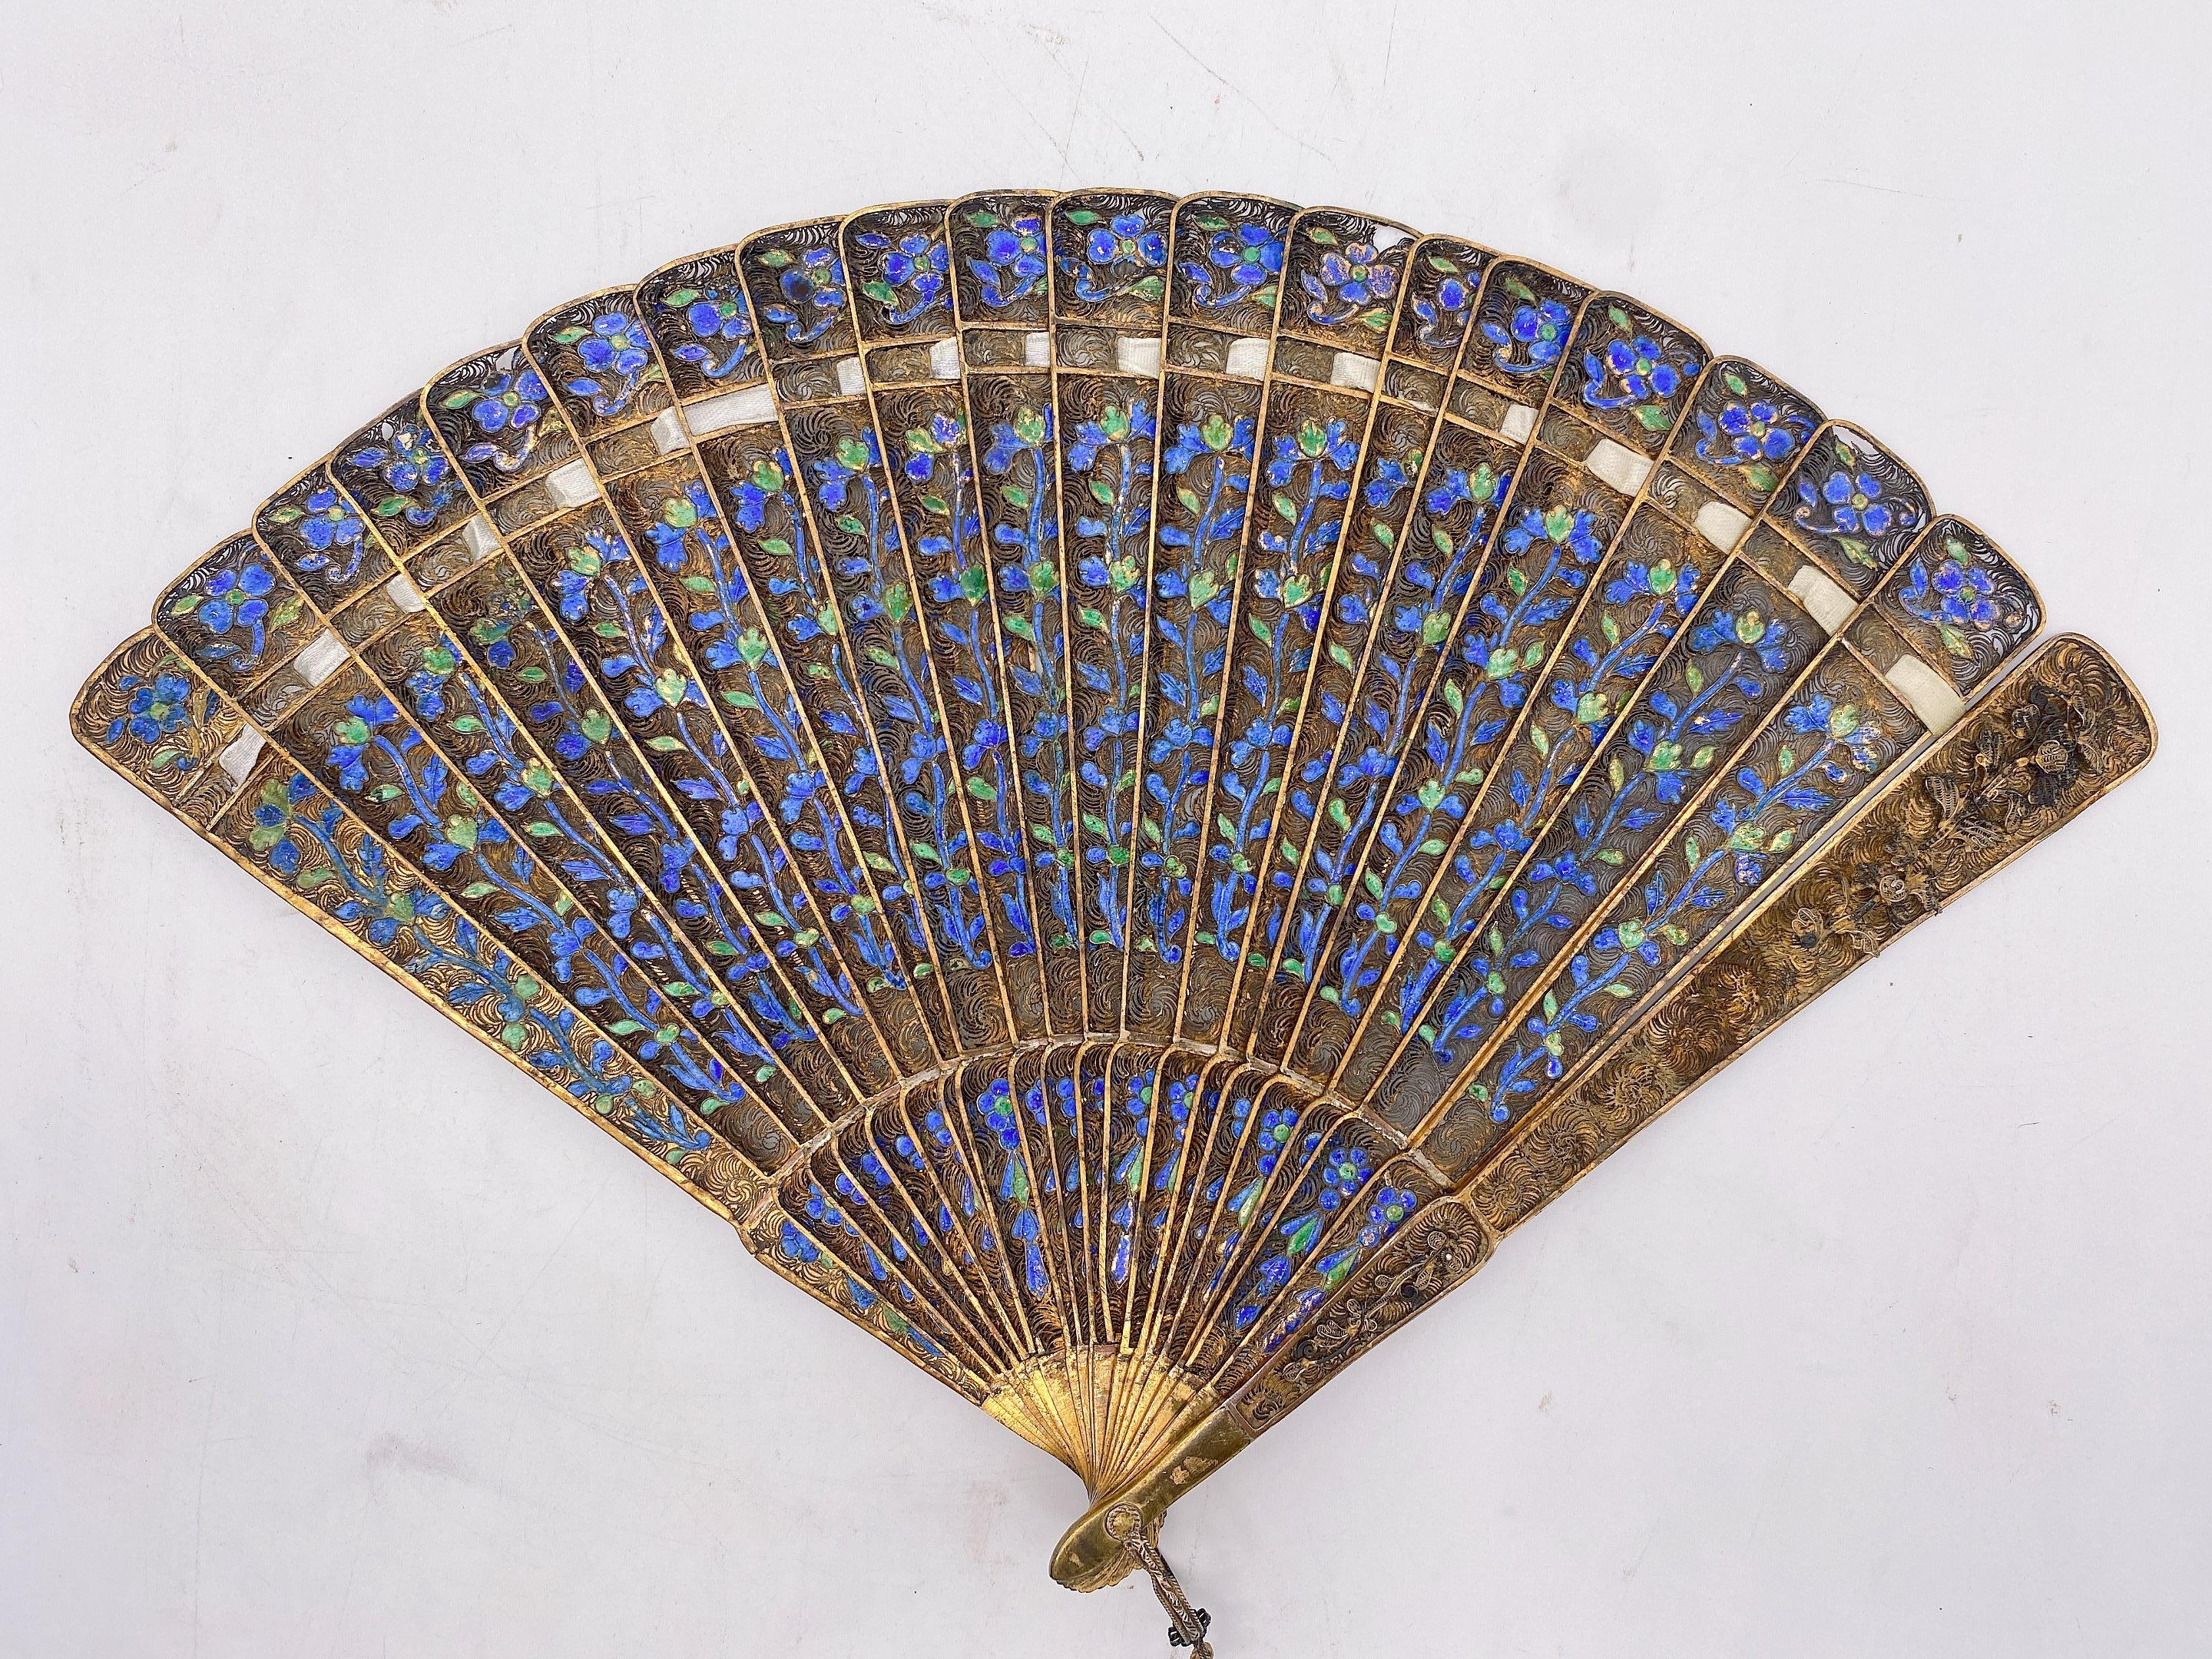 Rare Unique 17th Century Chinese Gilt Silver Filigree and Enamel Brise Fan For Sale 3